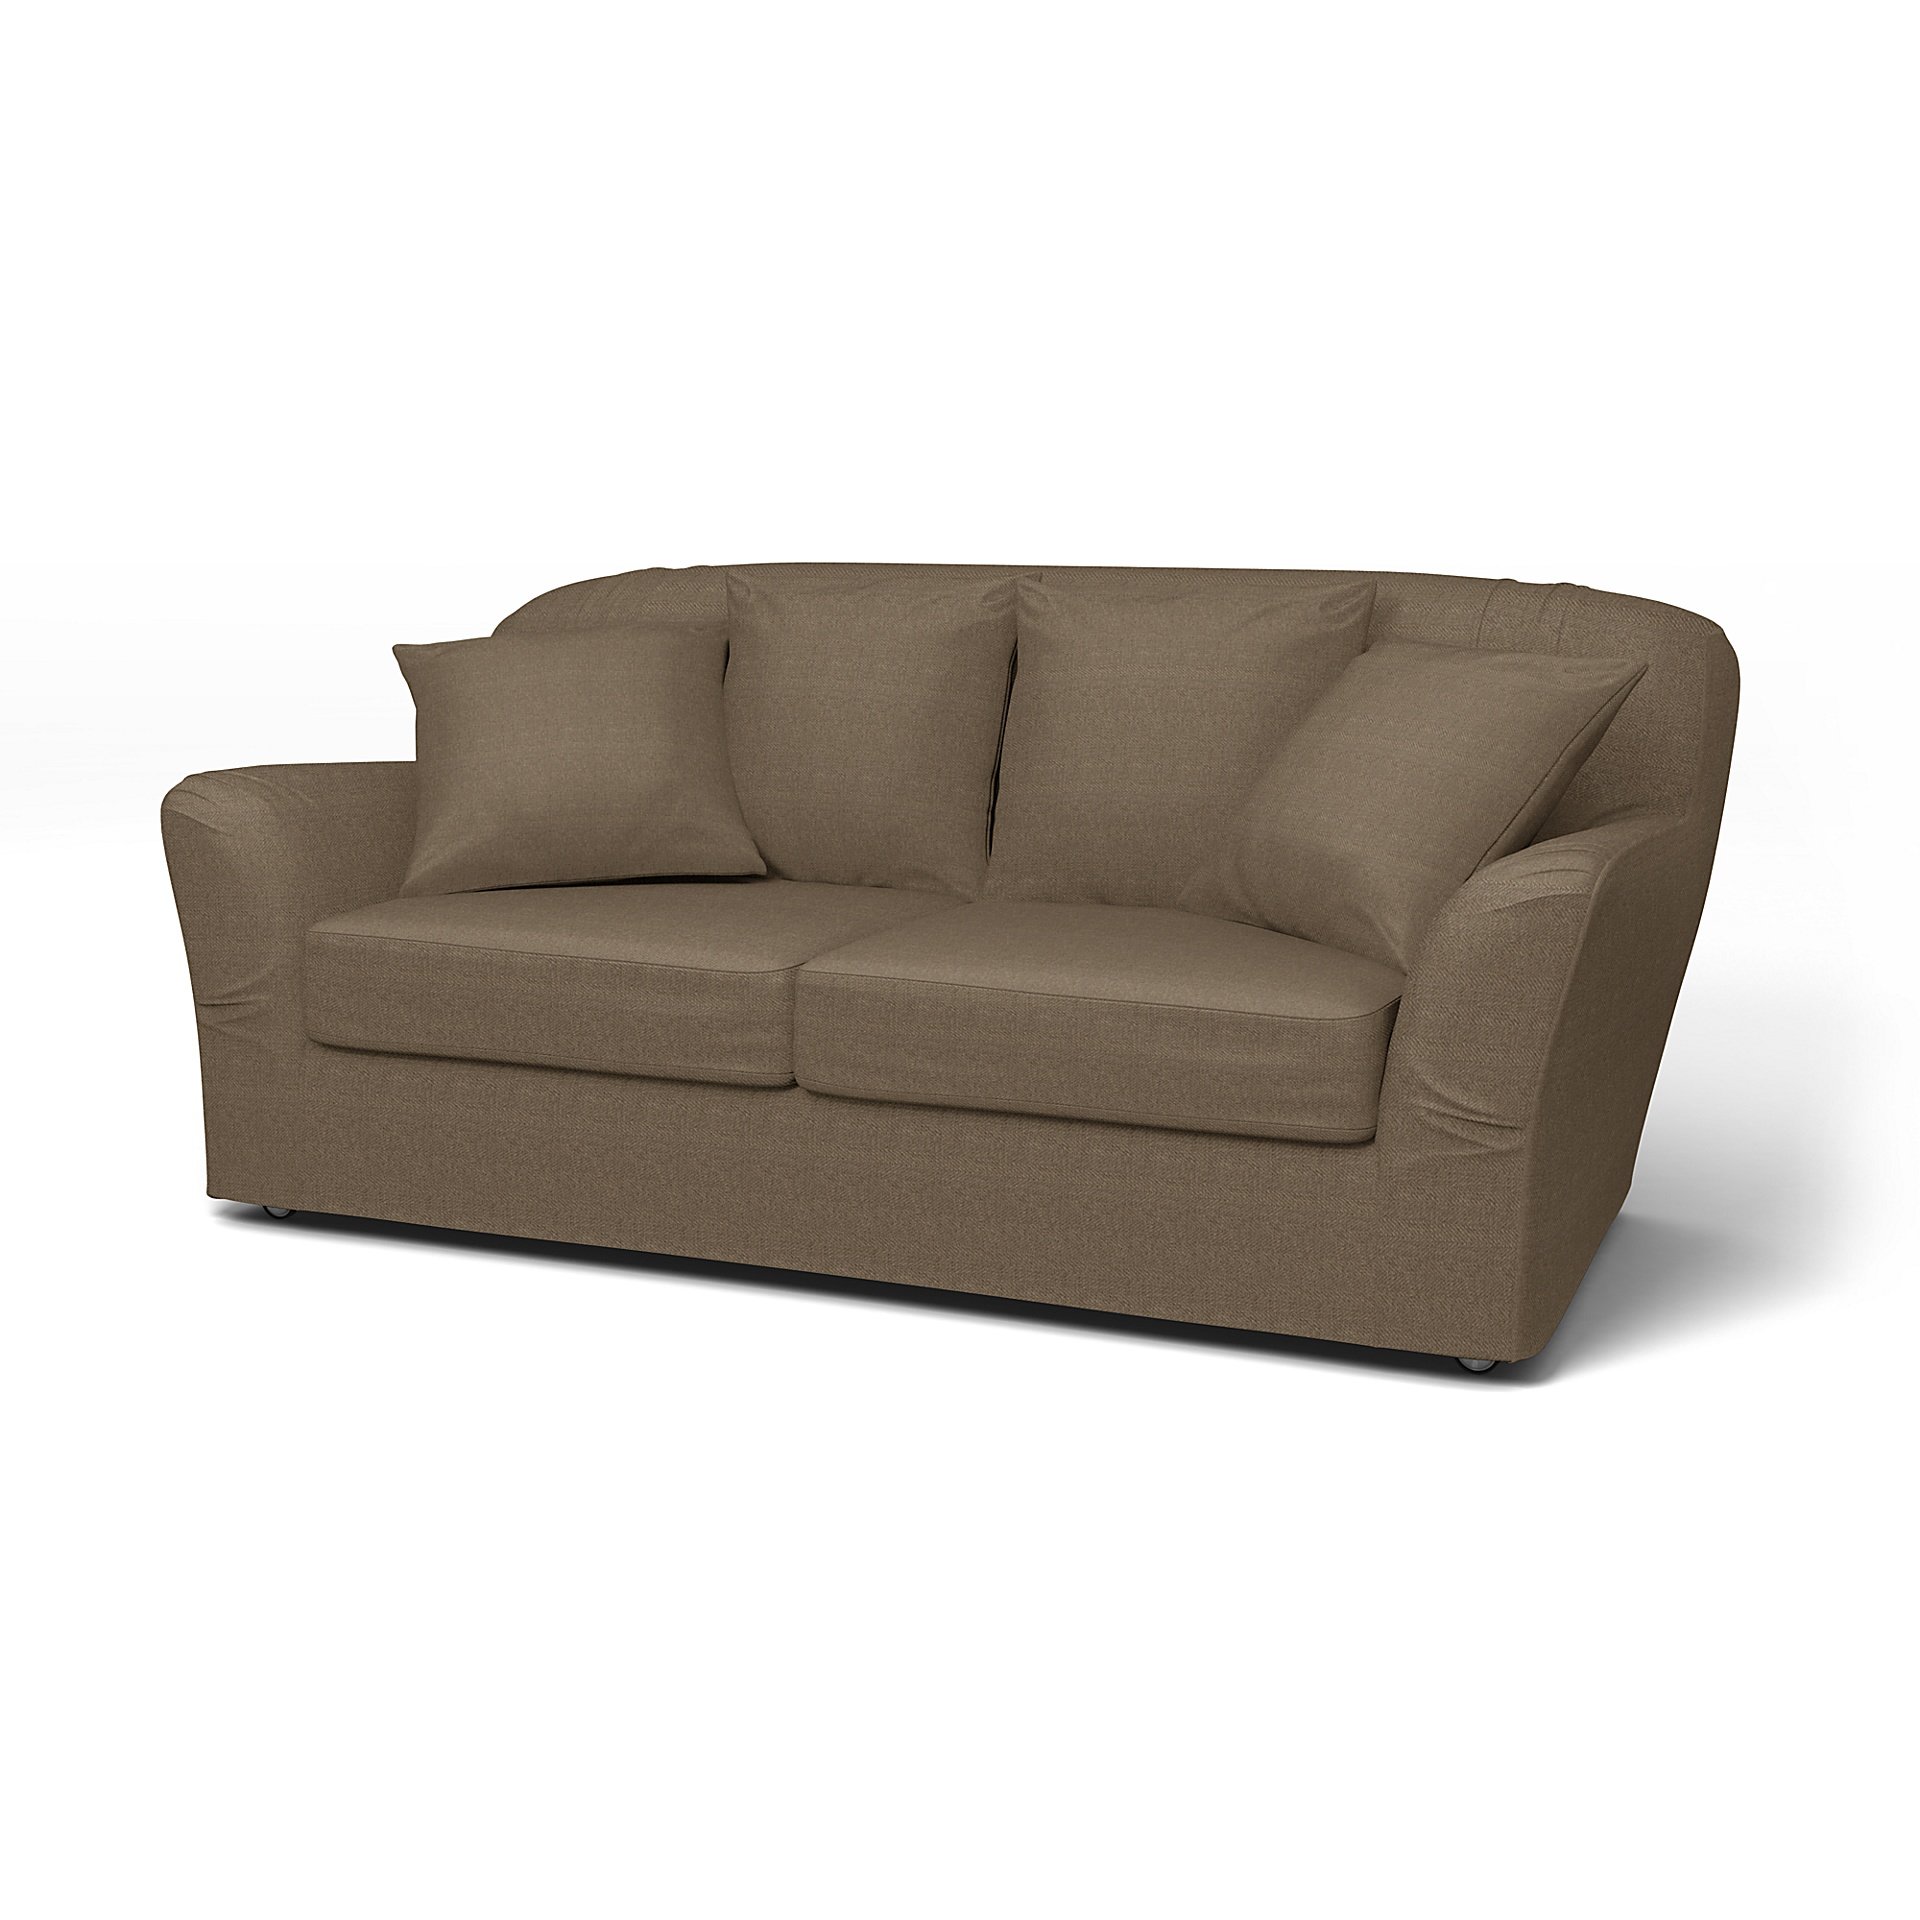 IKEA - Tomelilla 2 seater sofa, Dark Taupe, Boucle & Texture - Bemz